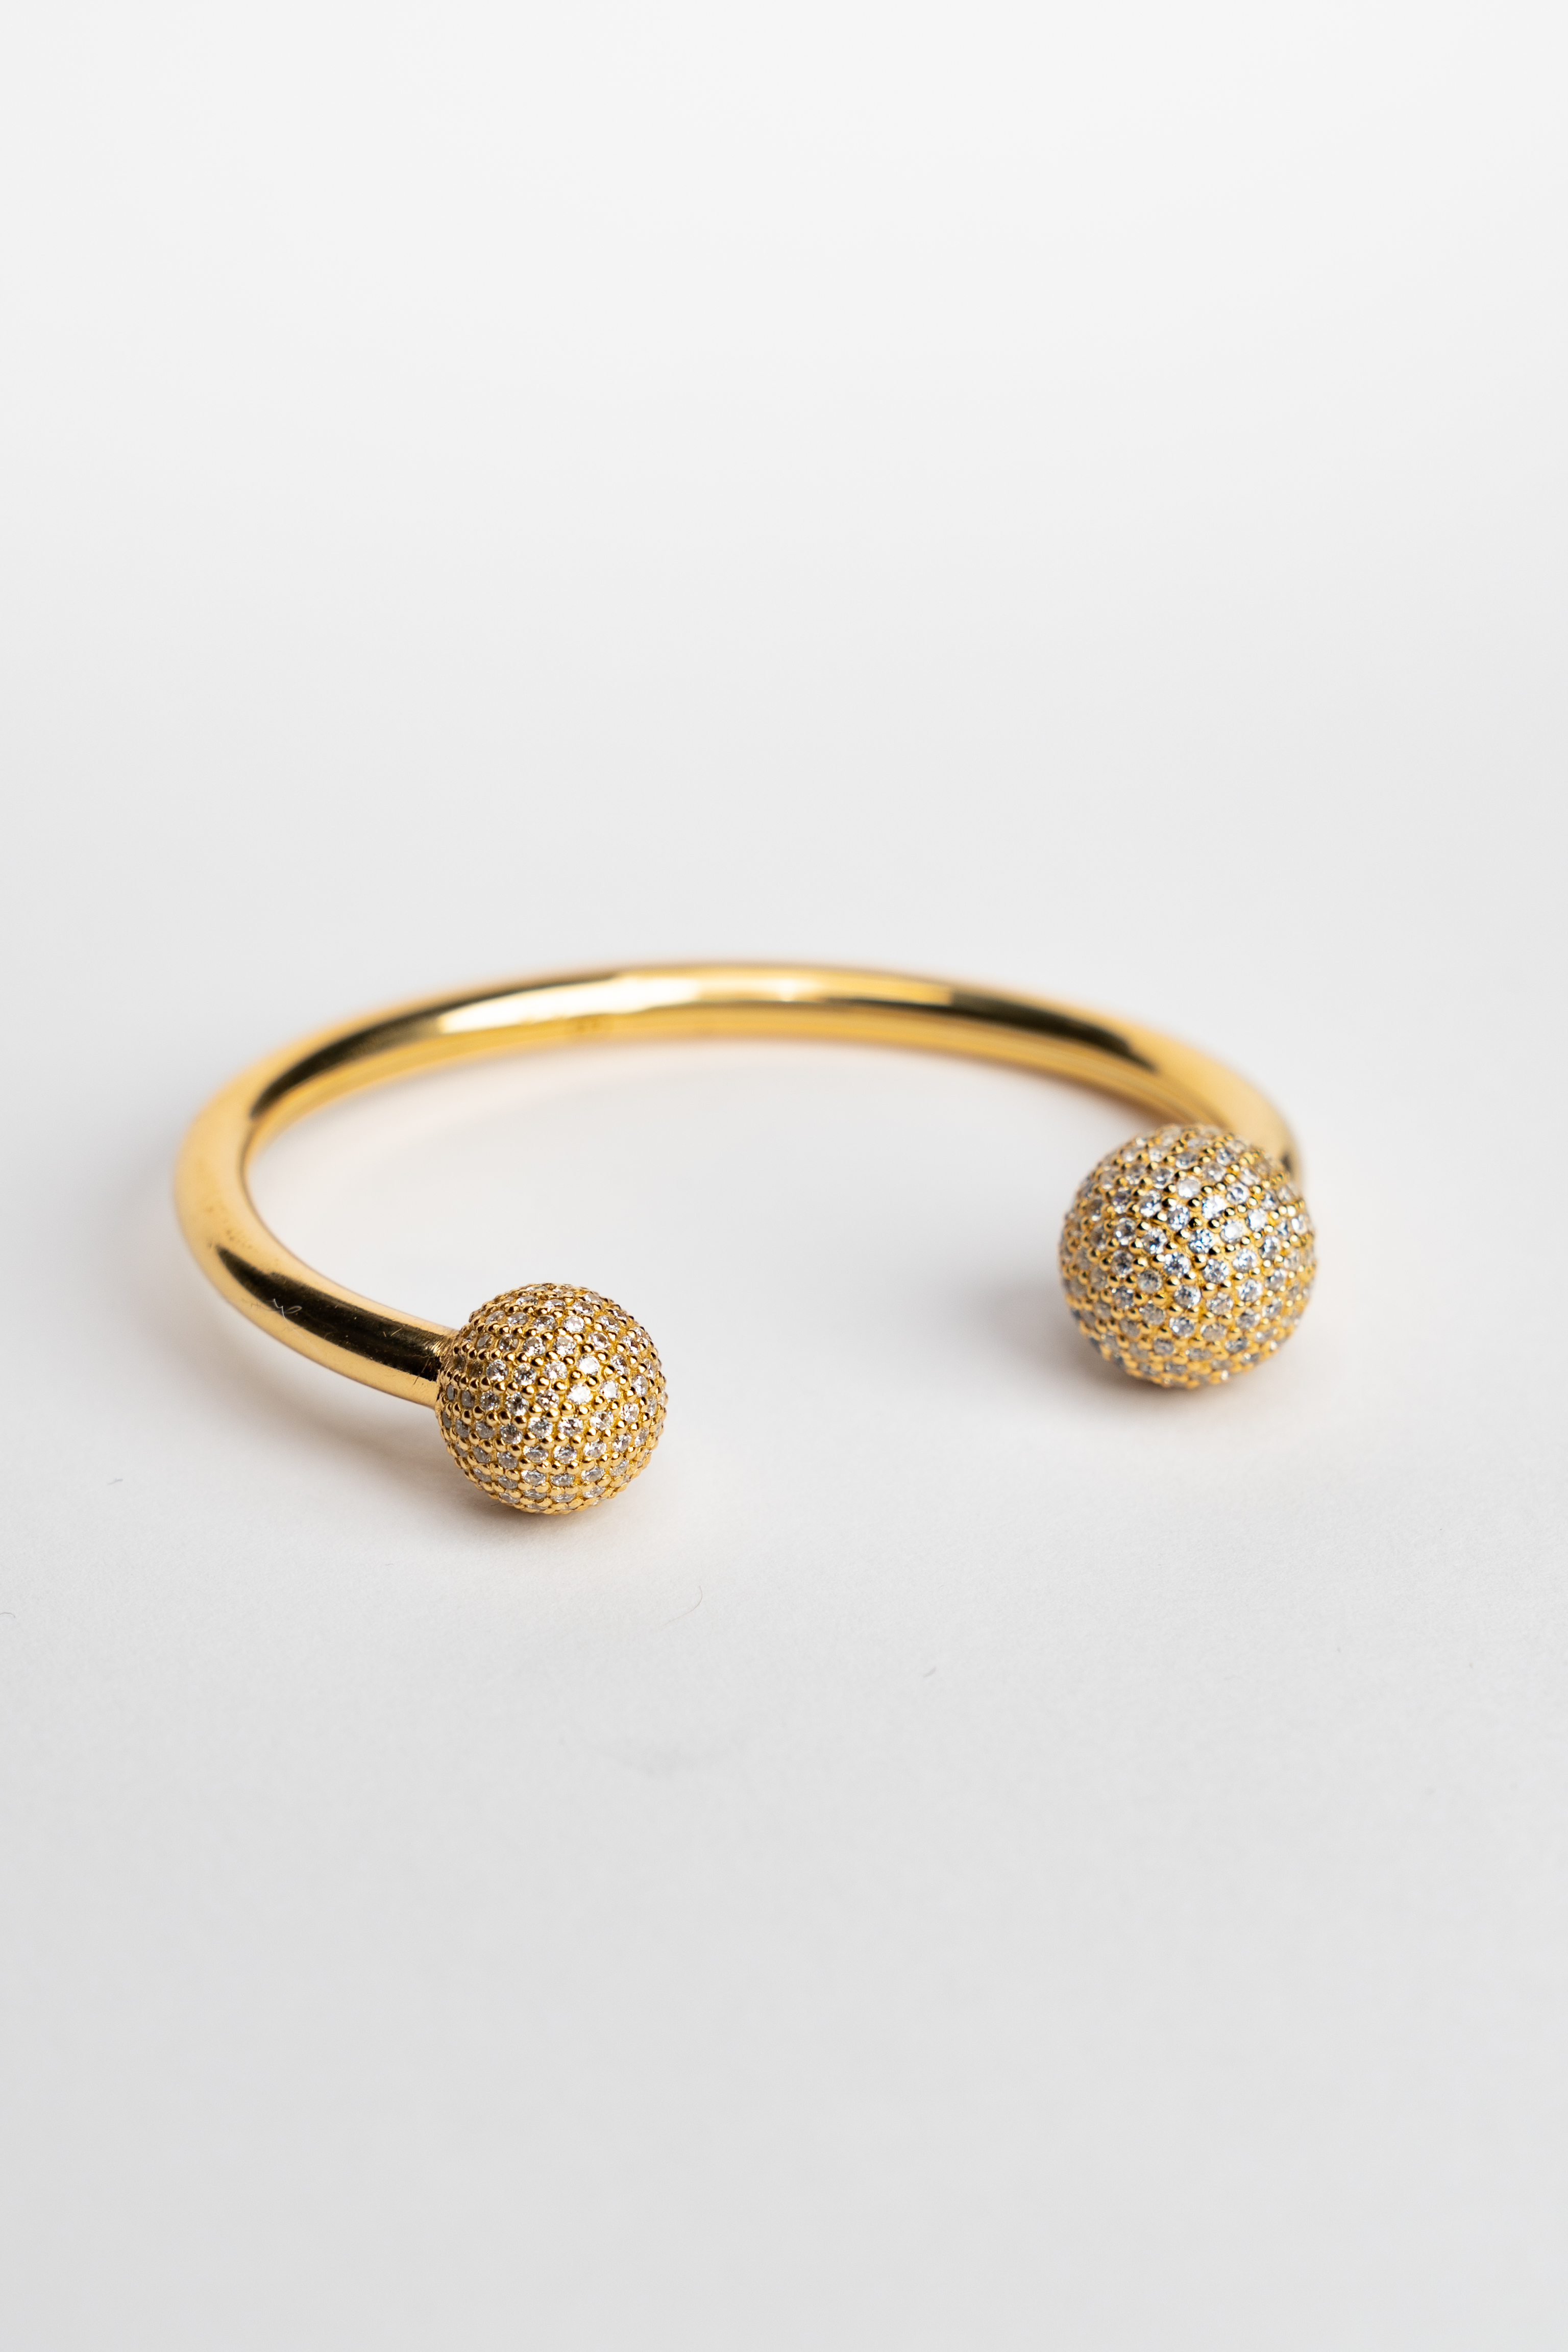 18k yellow gold bracelet with 10ct diamonds VSS1-0